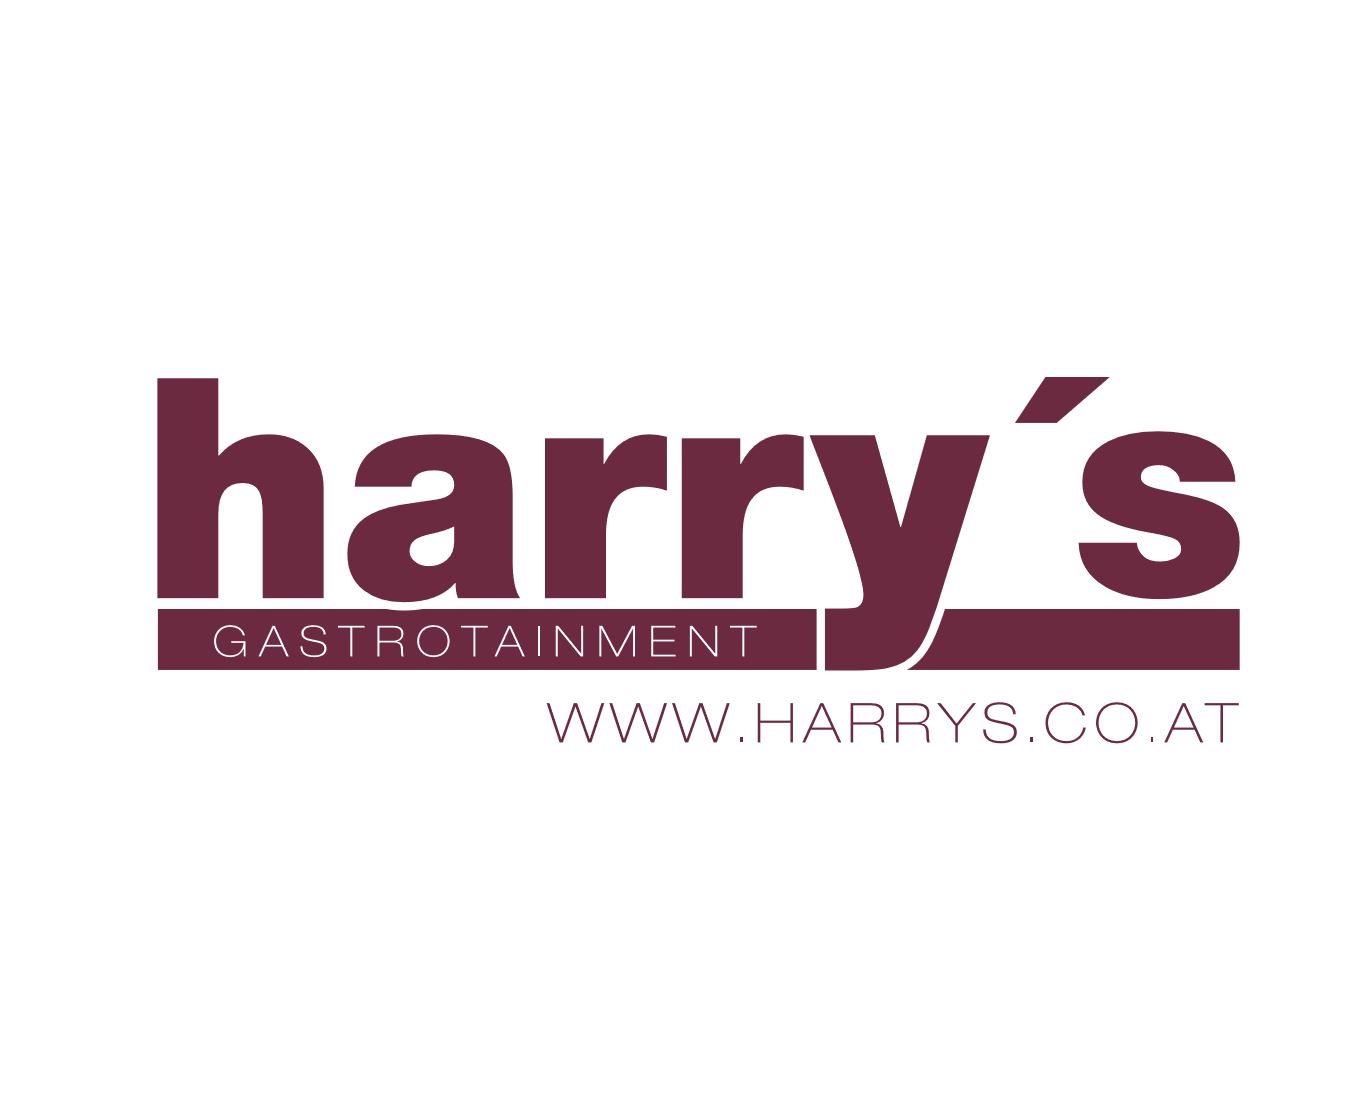 harrys logo 2013 finish